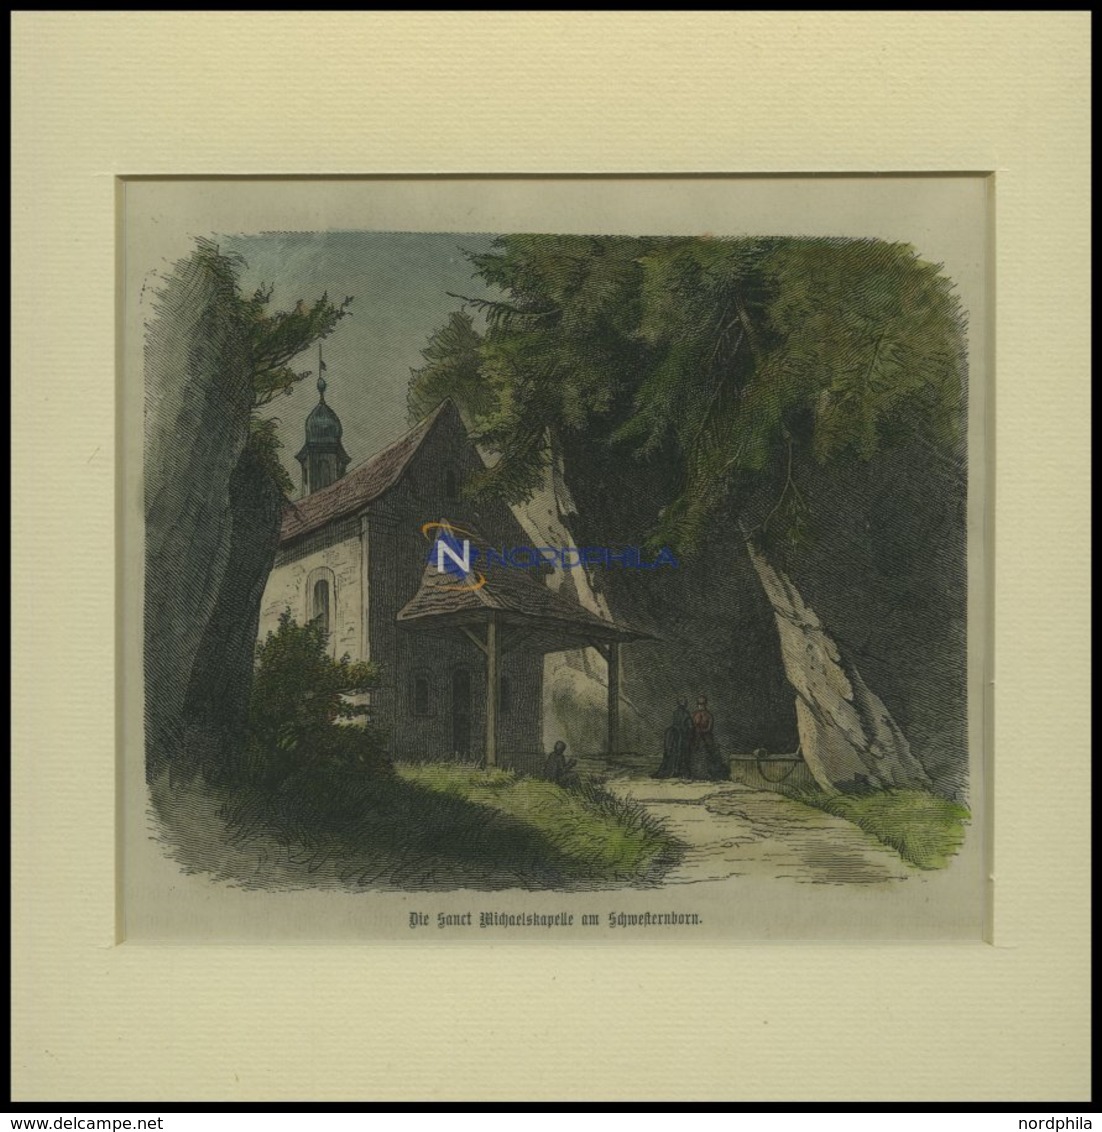 ST. MICHAELSKAPPELE Am Schwesternborn, Kolorierter Holzstich Um 1880 - Lithographies